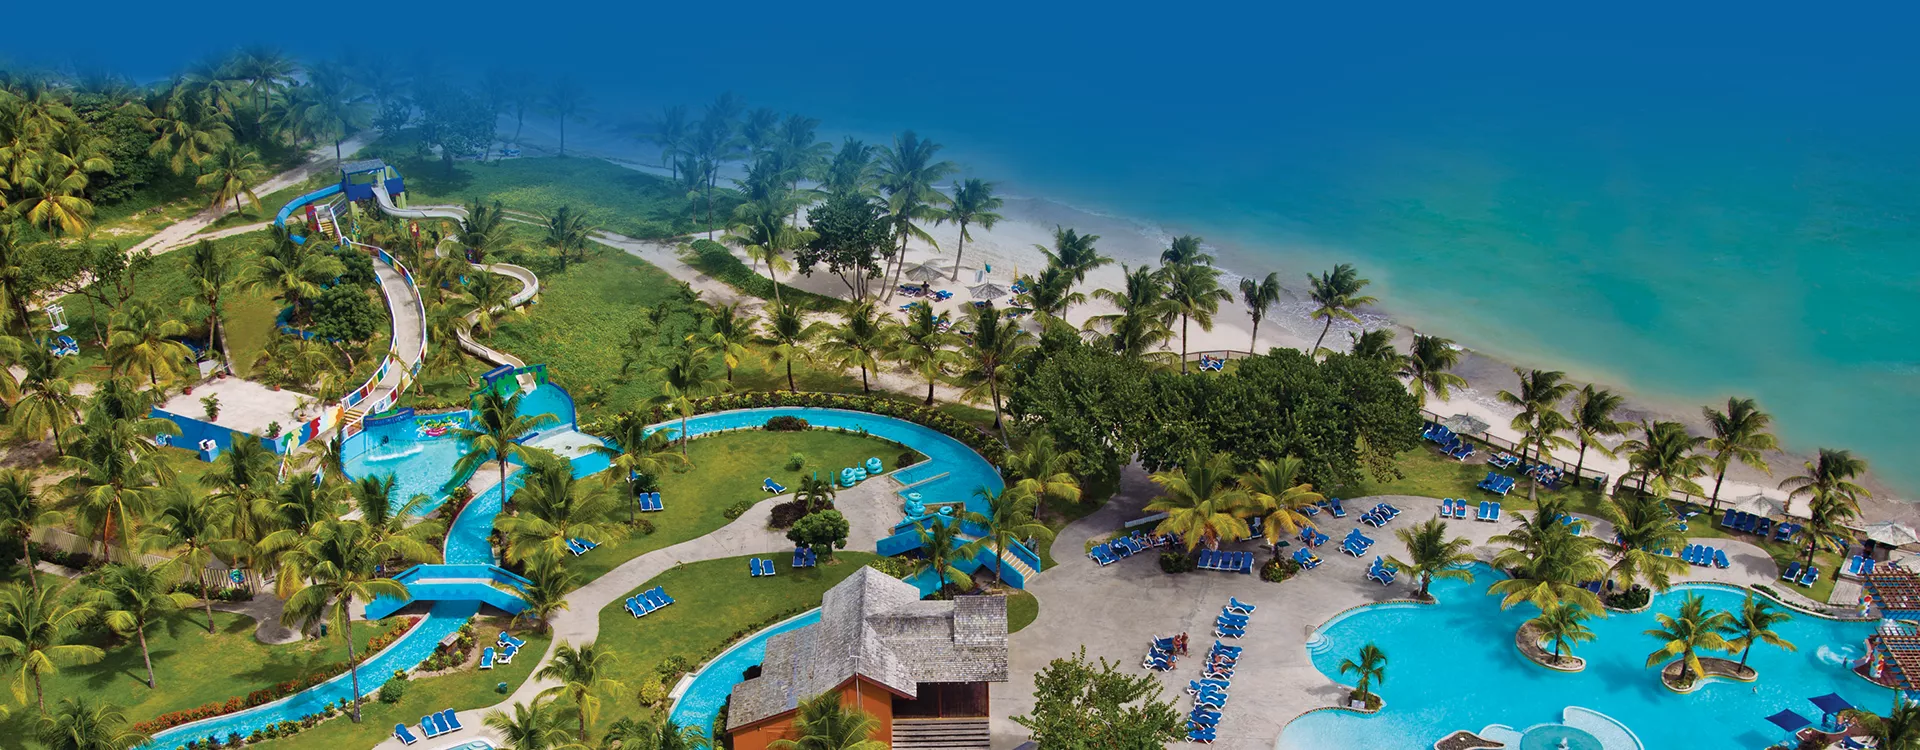 All-Inclusive Family Resort in Saint Lucia | Coconut Bay Beach Resort